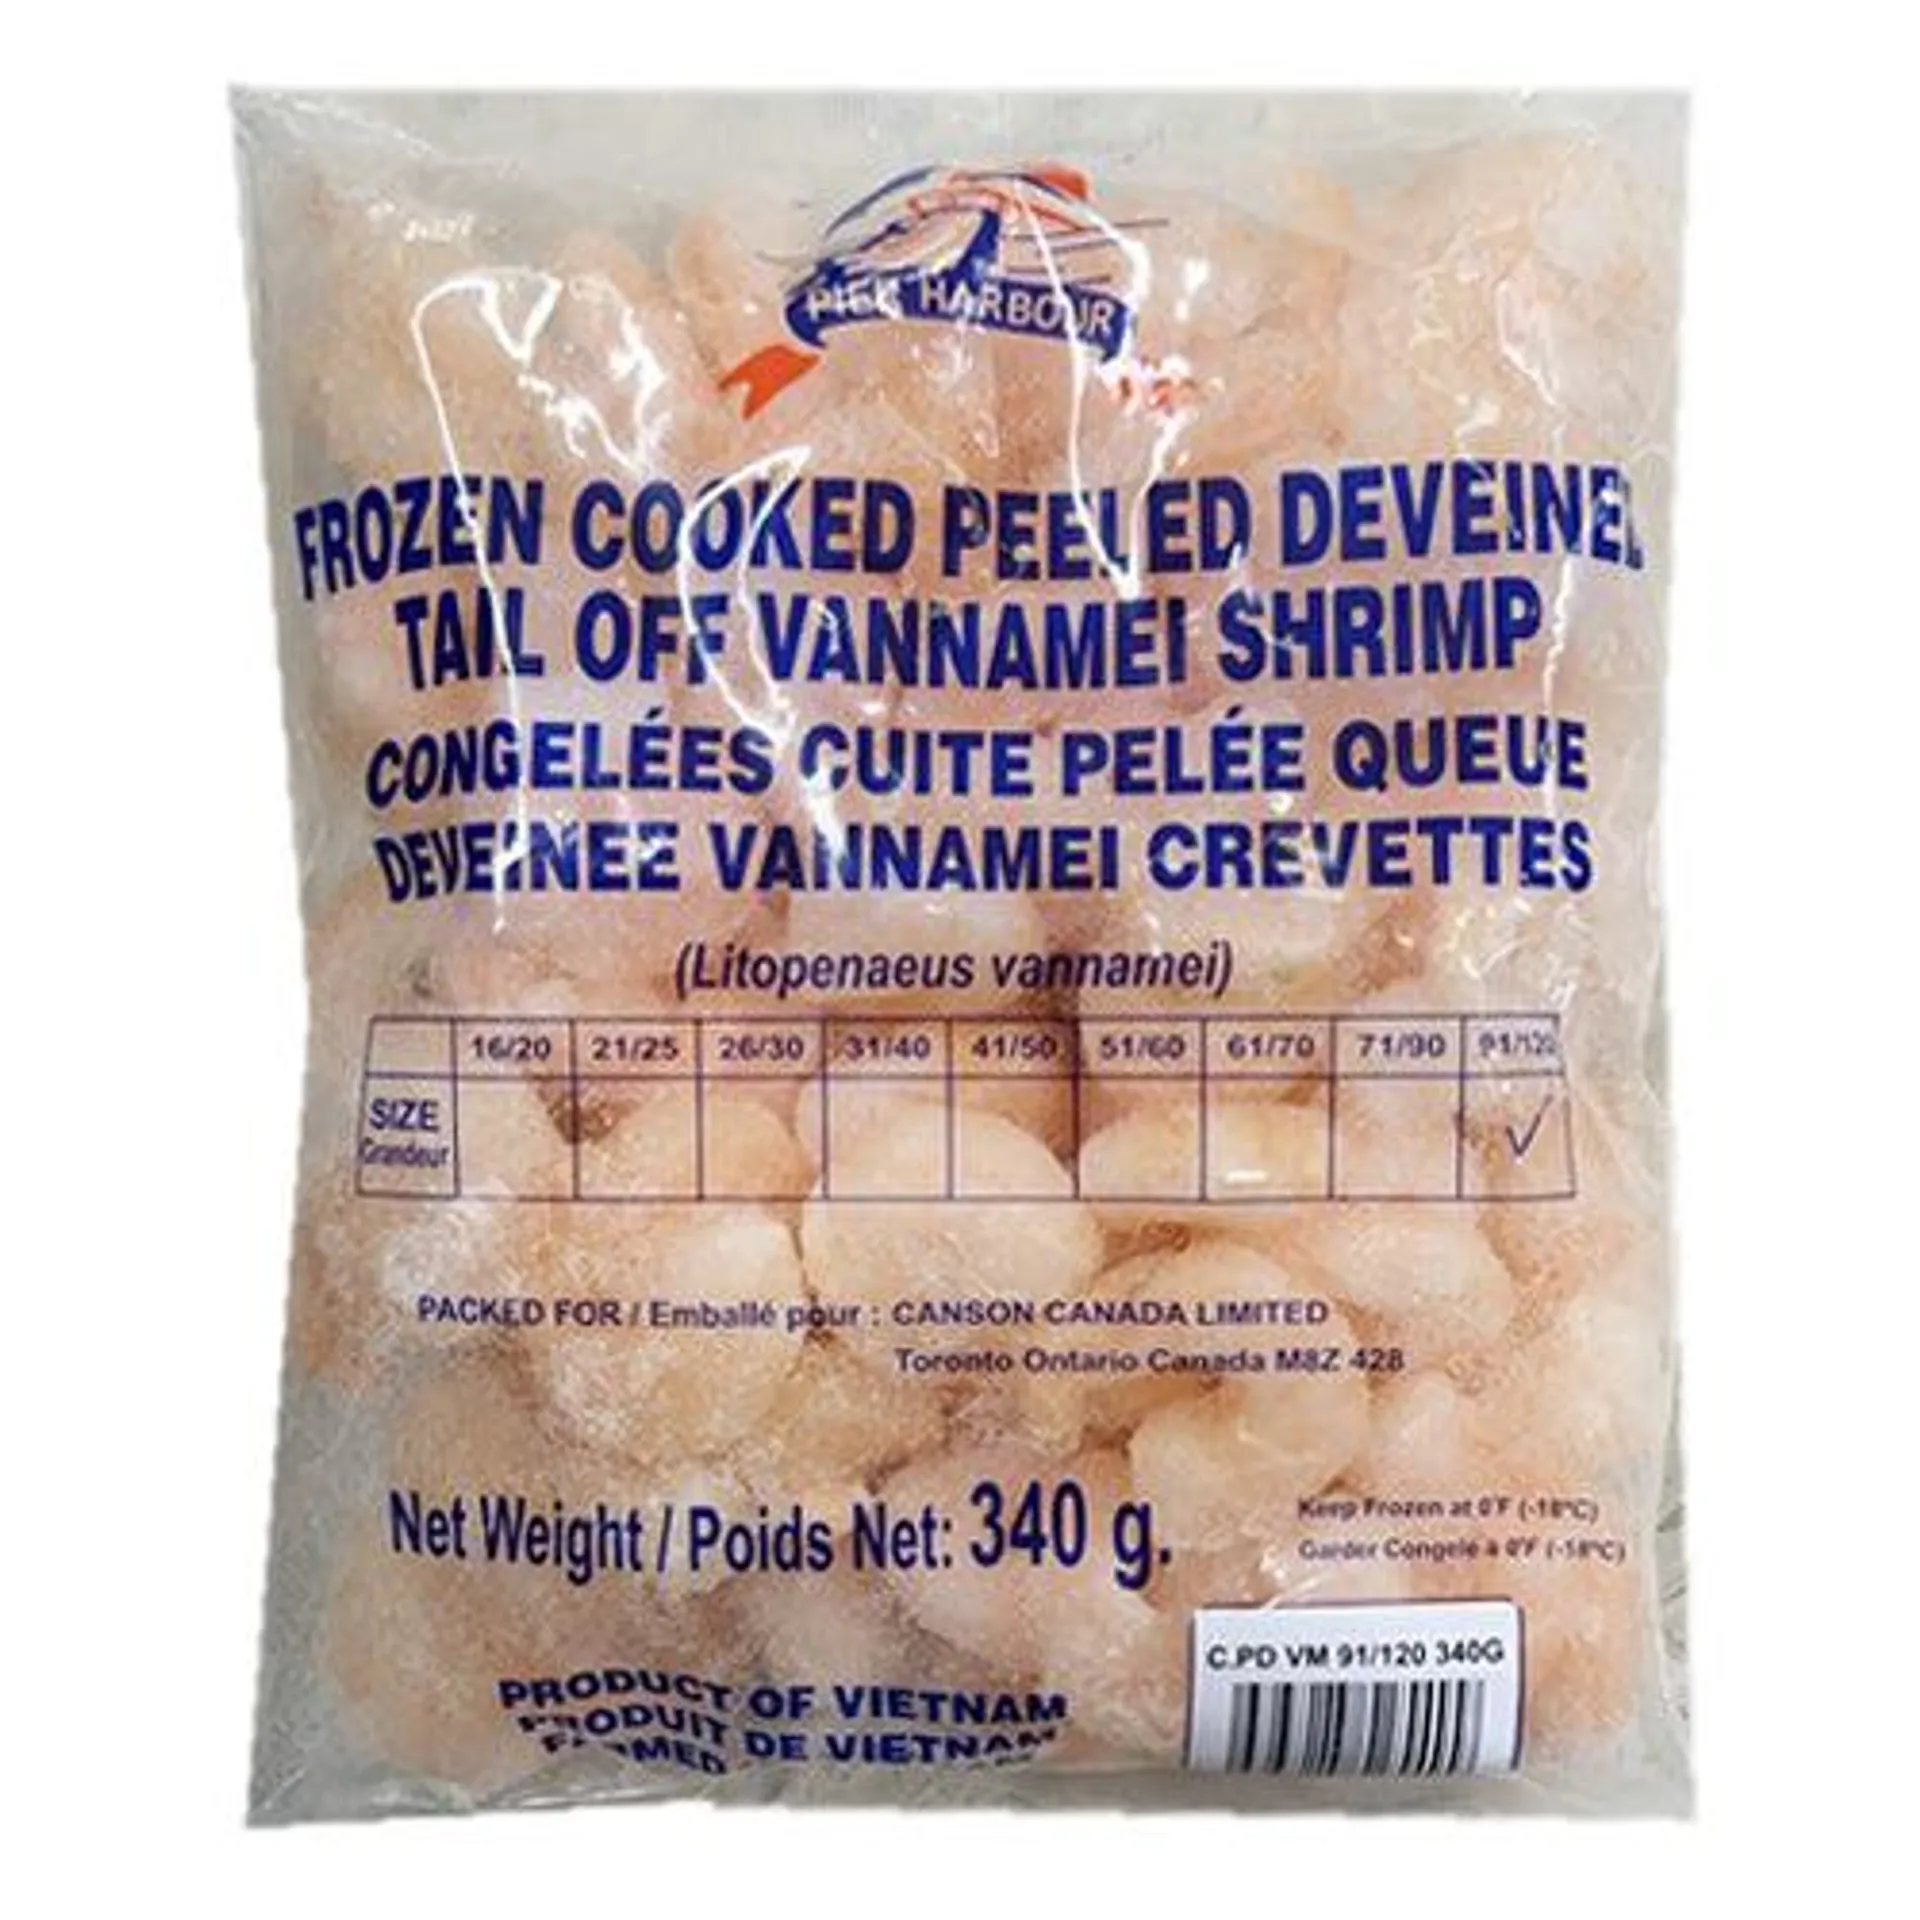 Pier harbour Frozen Cooked Peeled Deveined tail off Vannamei Shrimp 91/120